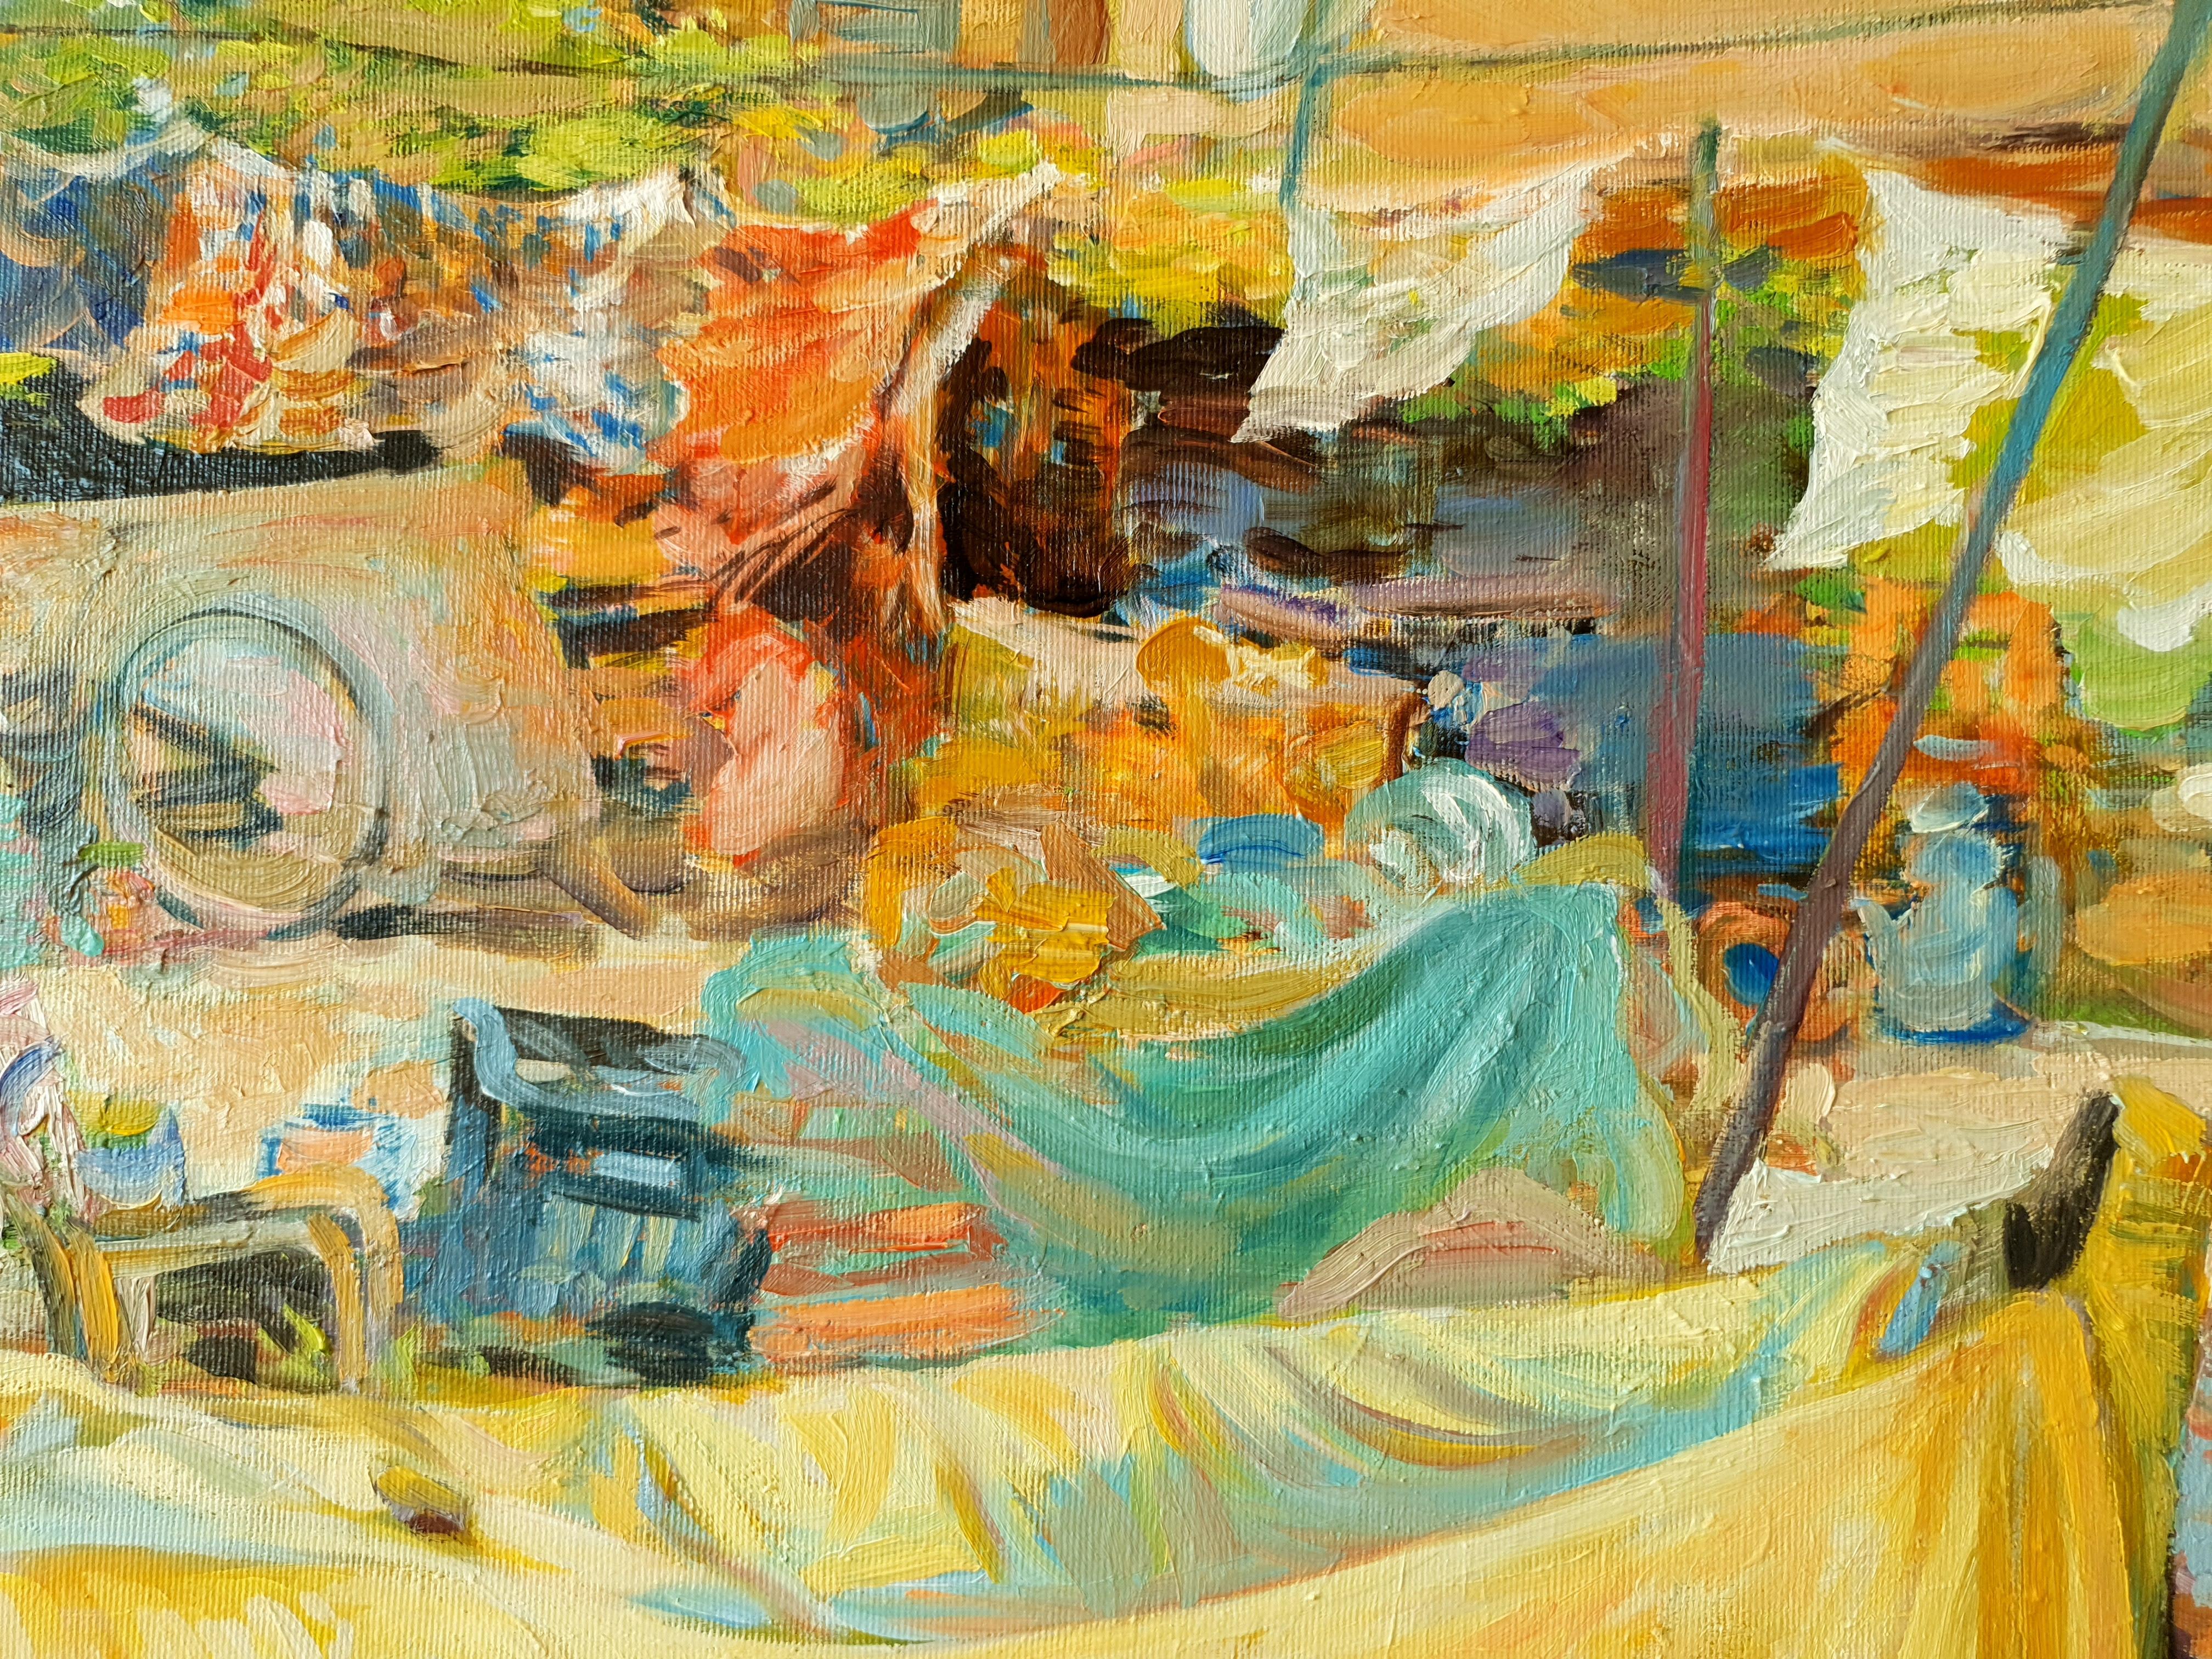 The Fisherman's Home - Peinture à l'huile Rouge Orange Vert Bleu Blanc Jaune Brown - Impressionnisme Painting par Petya Deneva